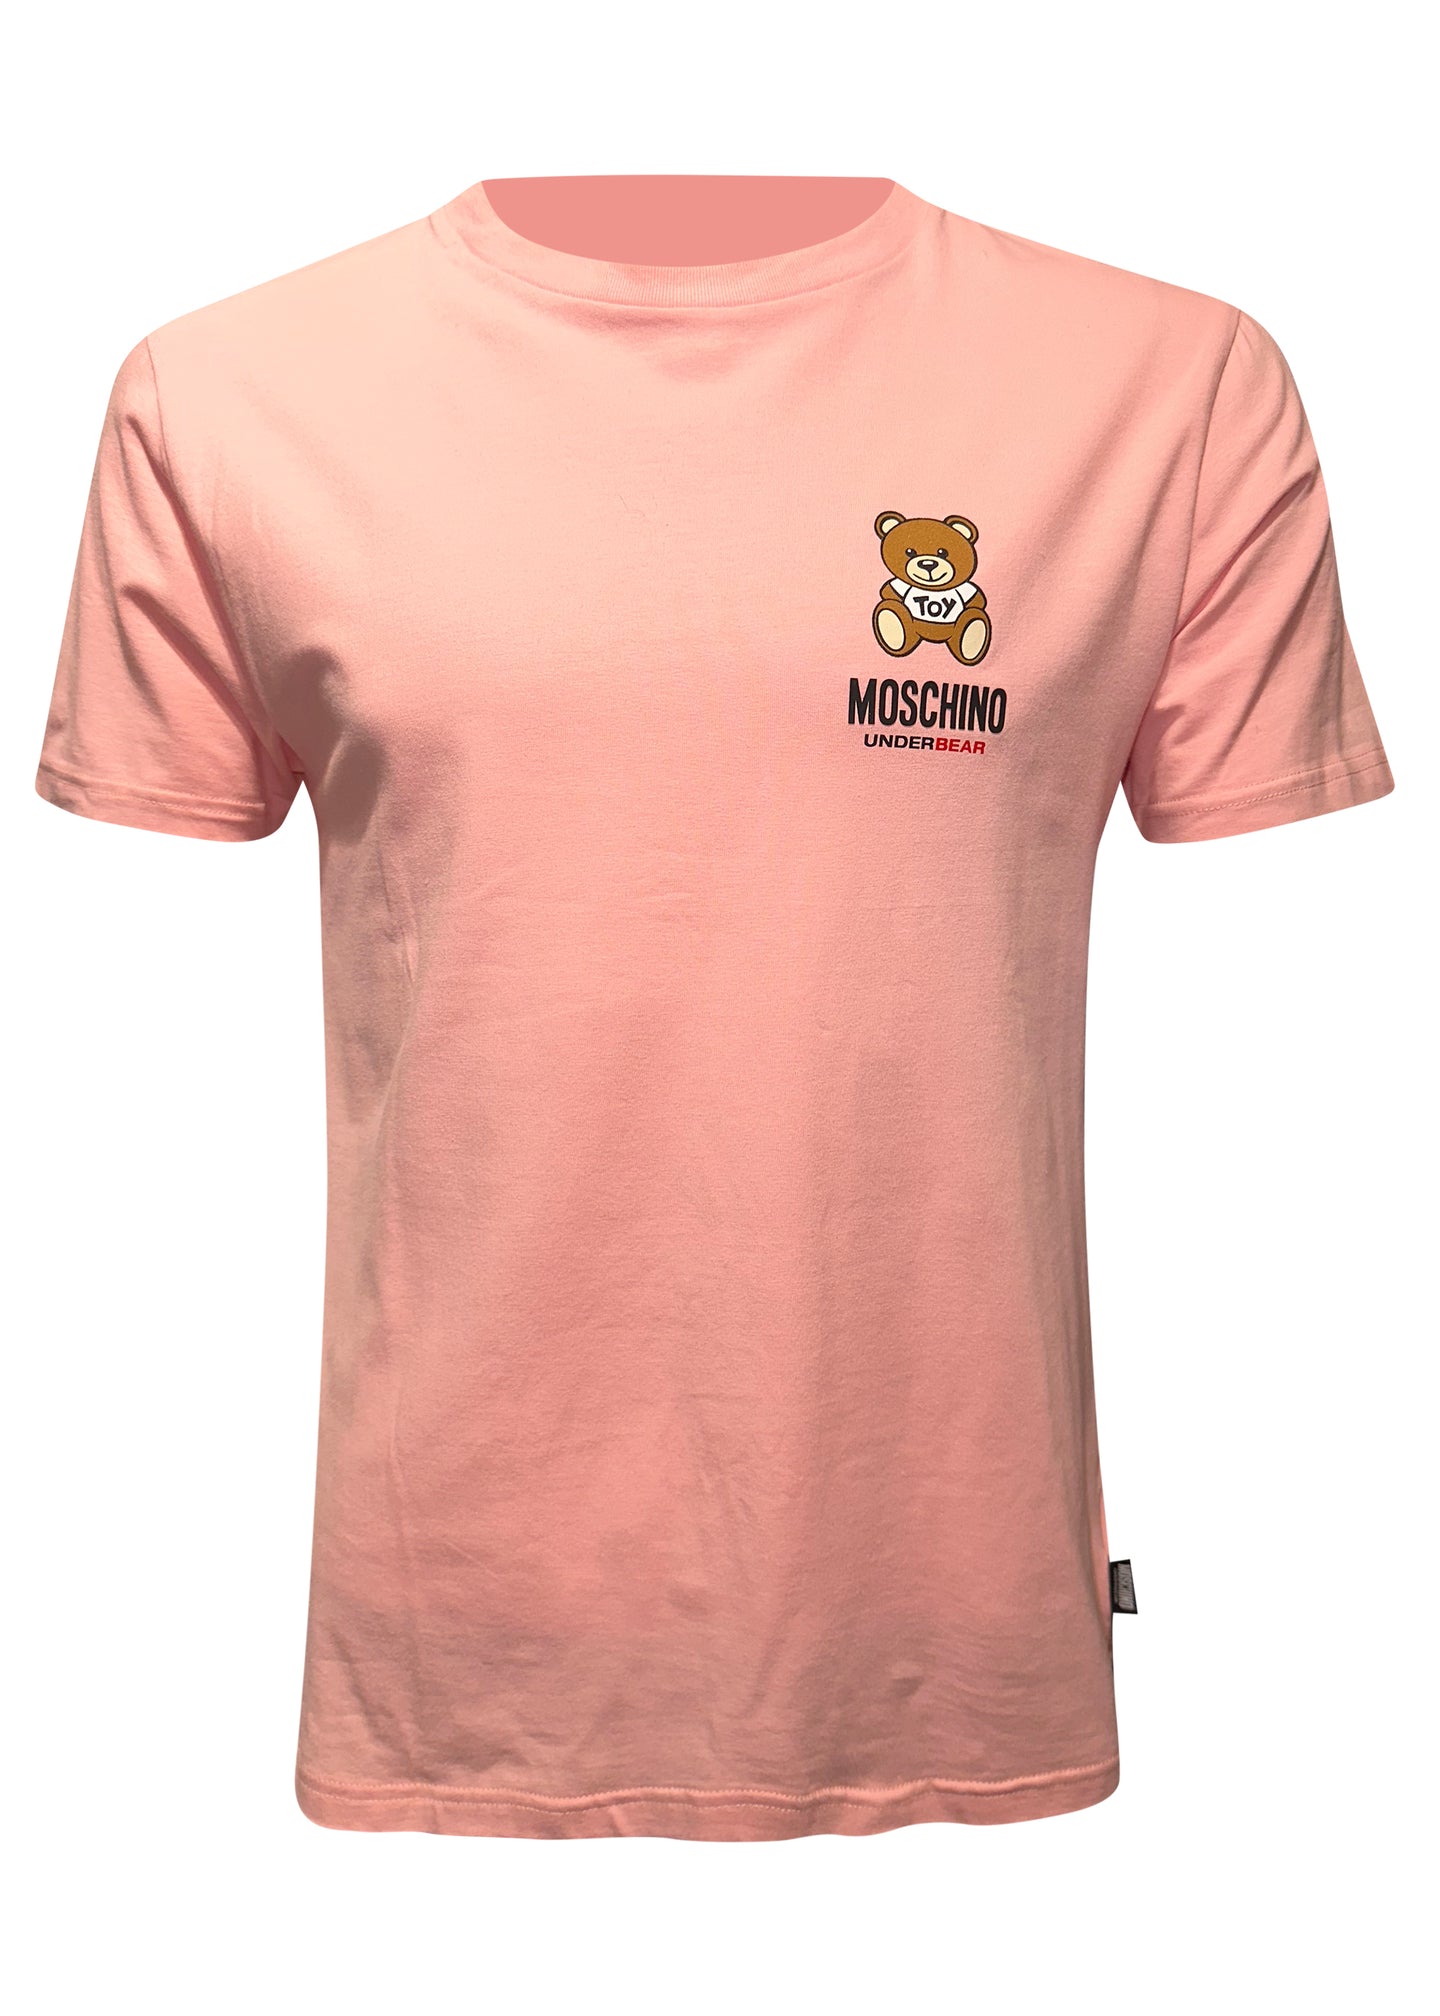 Moschino Track - Moschino Underbear Crewneck T-Shirt - 400178 - Pink